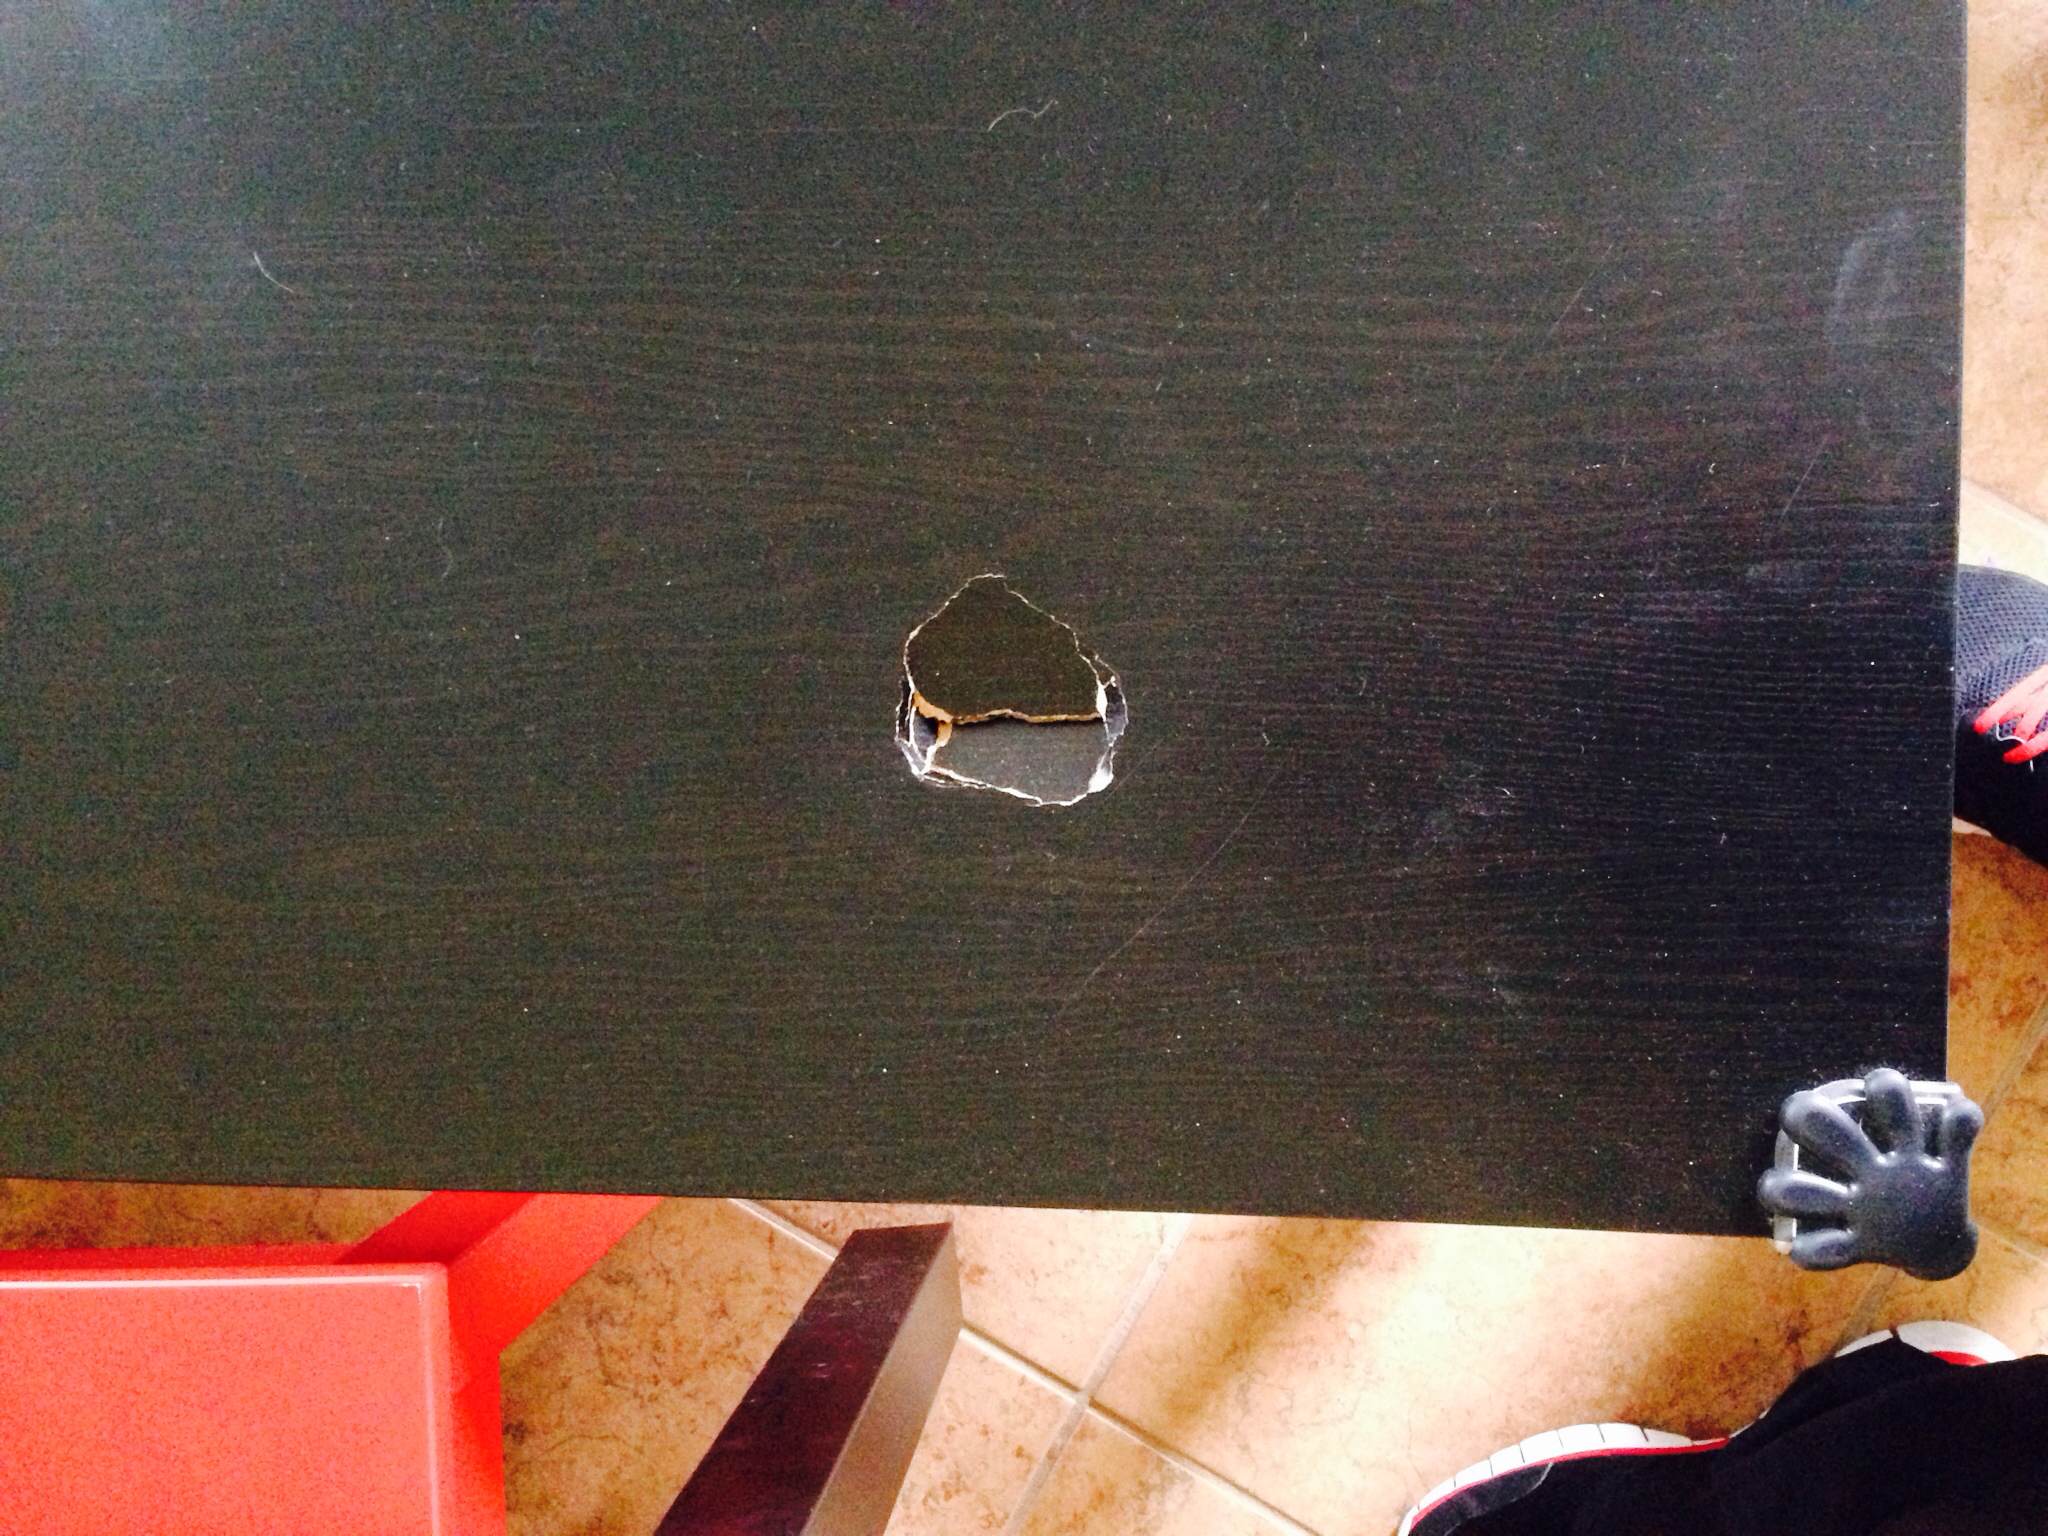 Big hole on my table